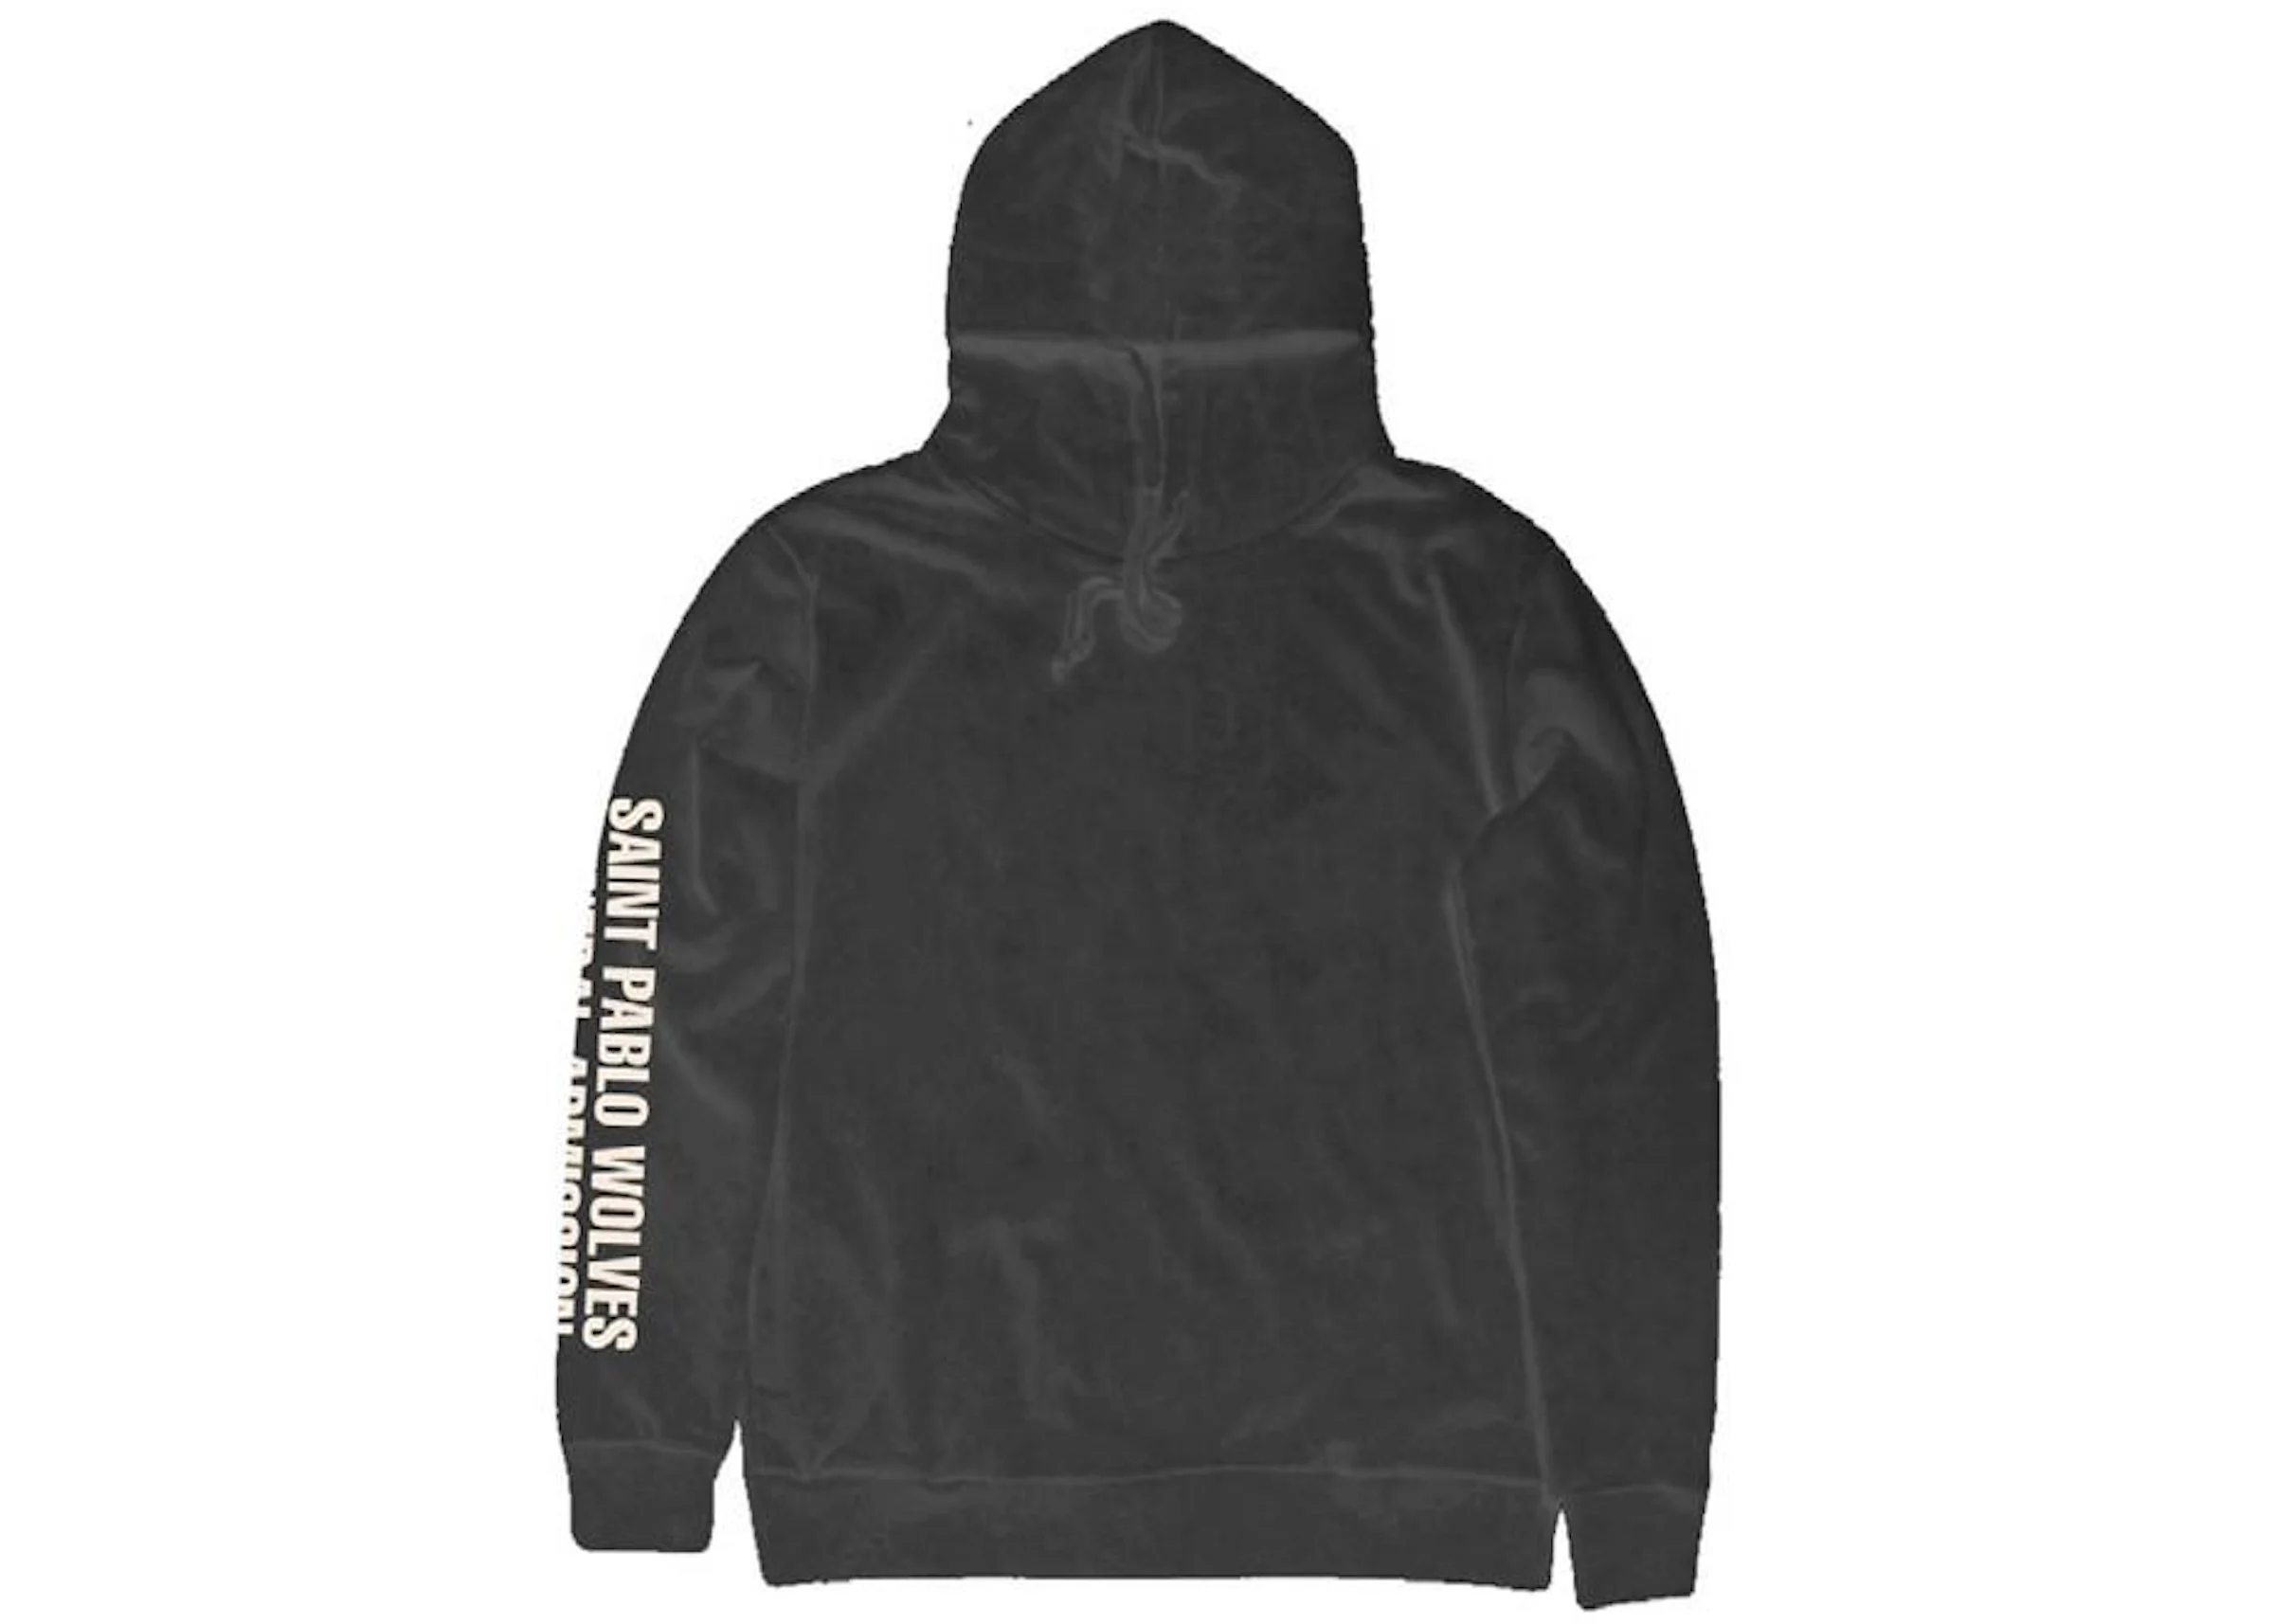 Kanye West Hoodies - Essentials Sweatshirts Hoodies For Men/ Women